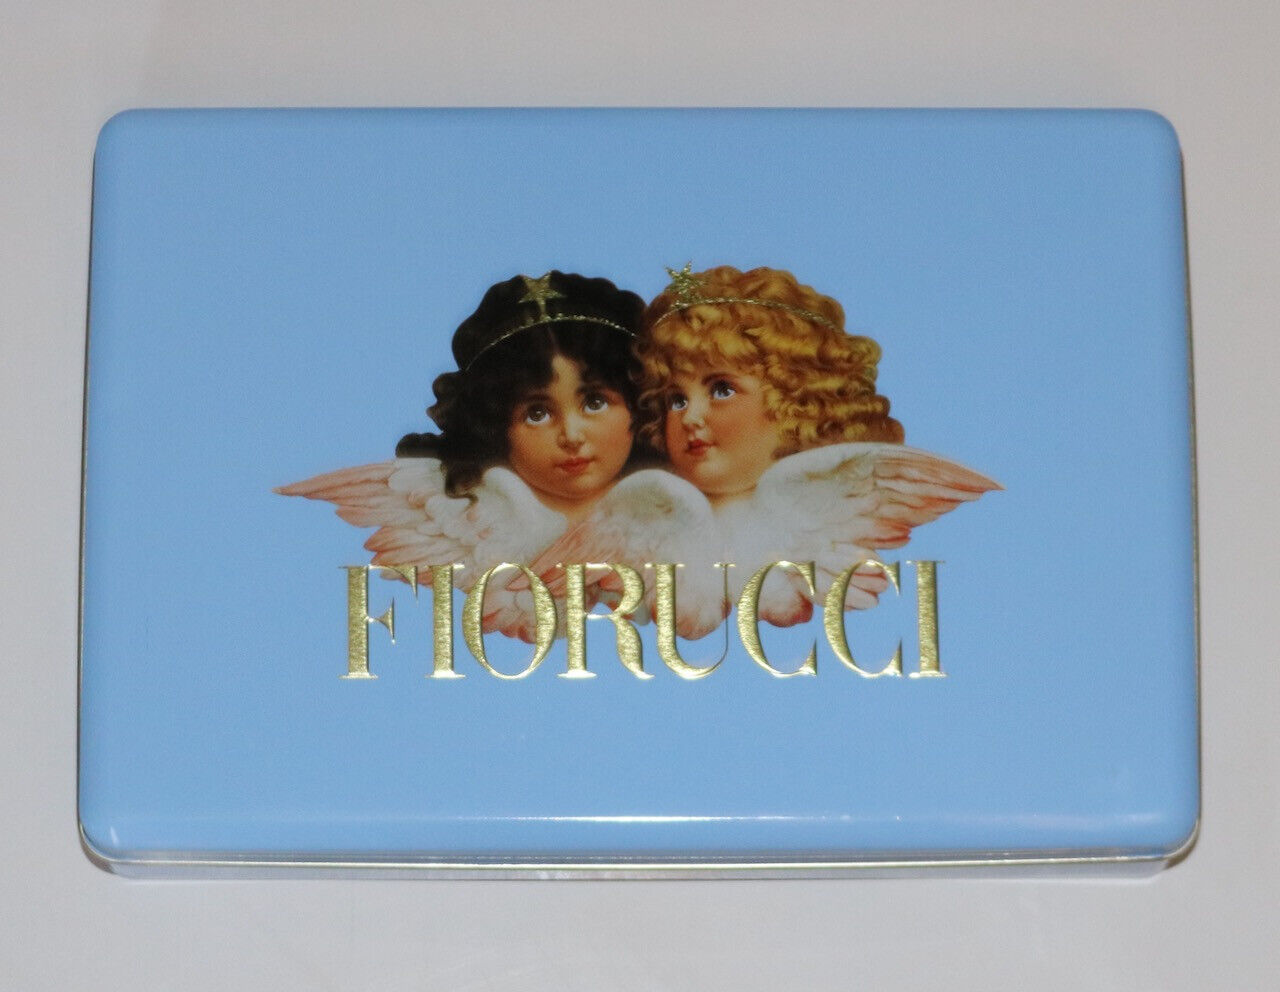 FIORUCCI cherubs blue tin container box pop art